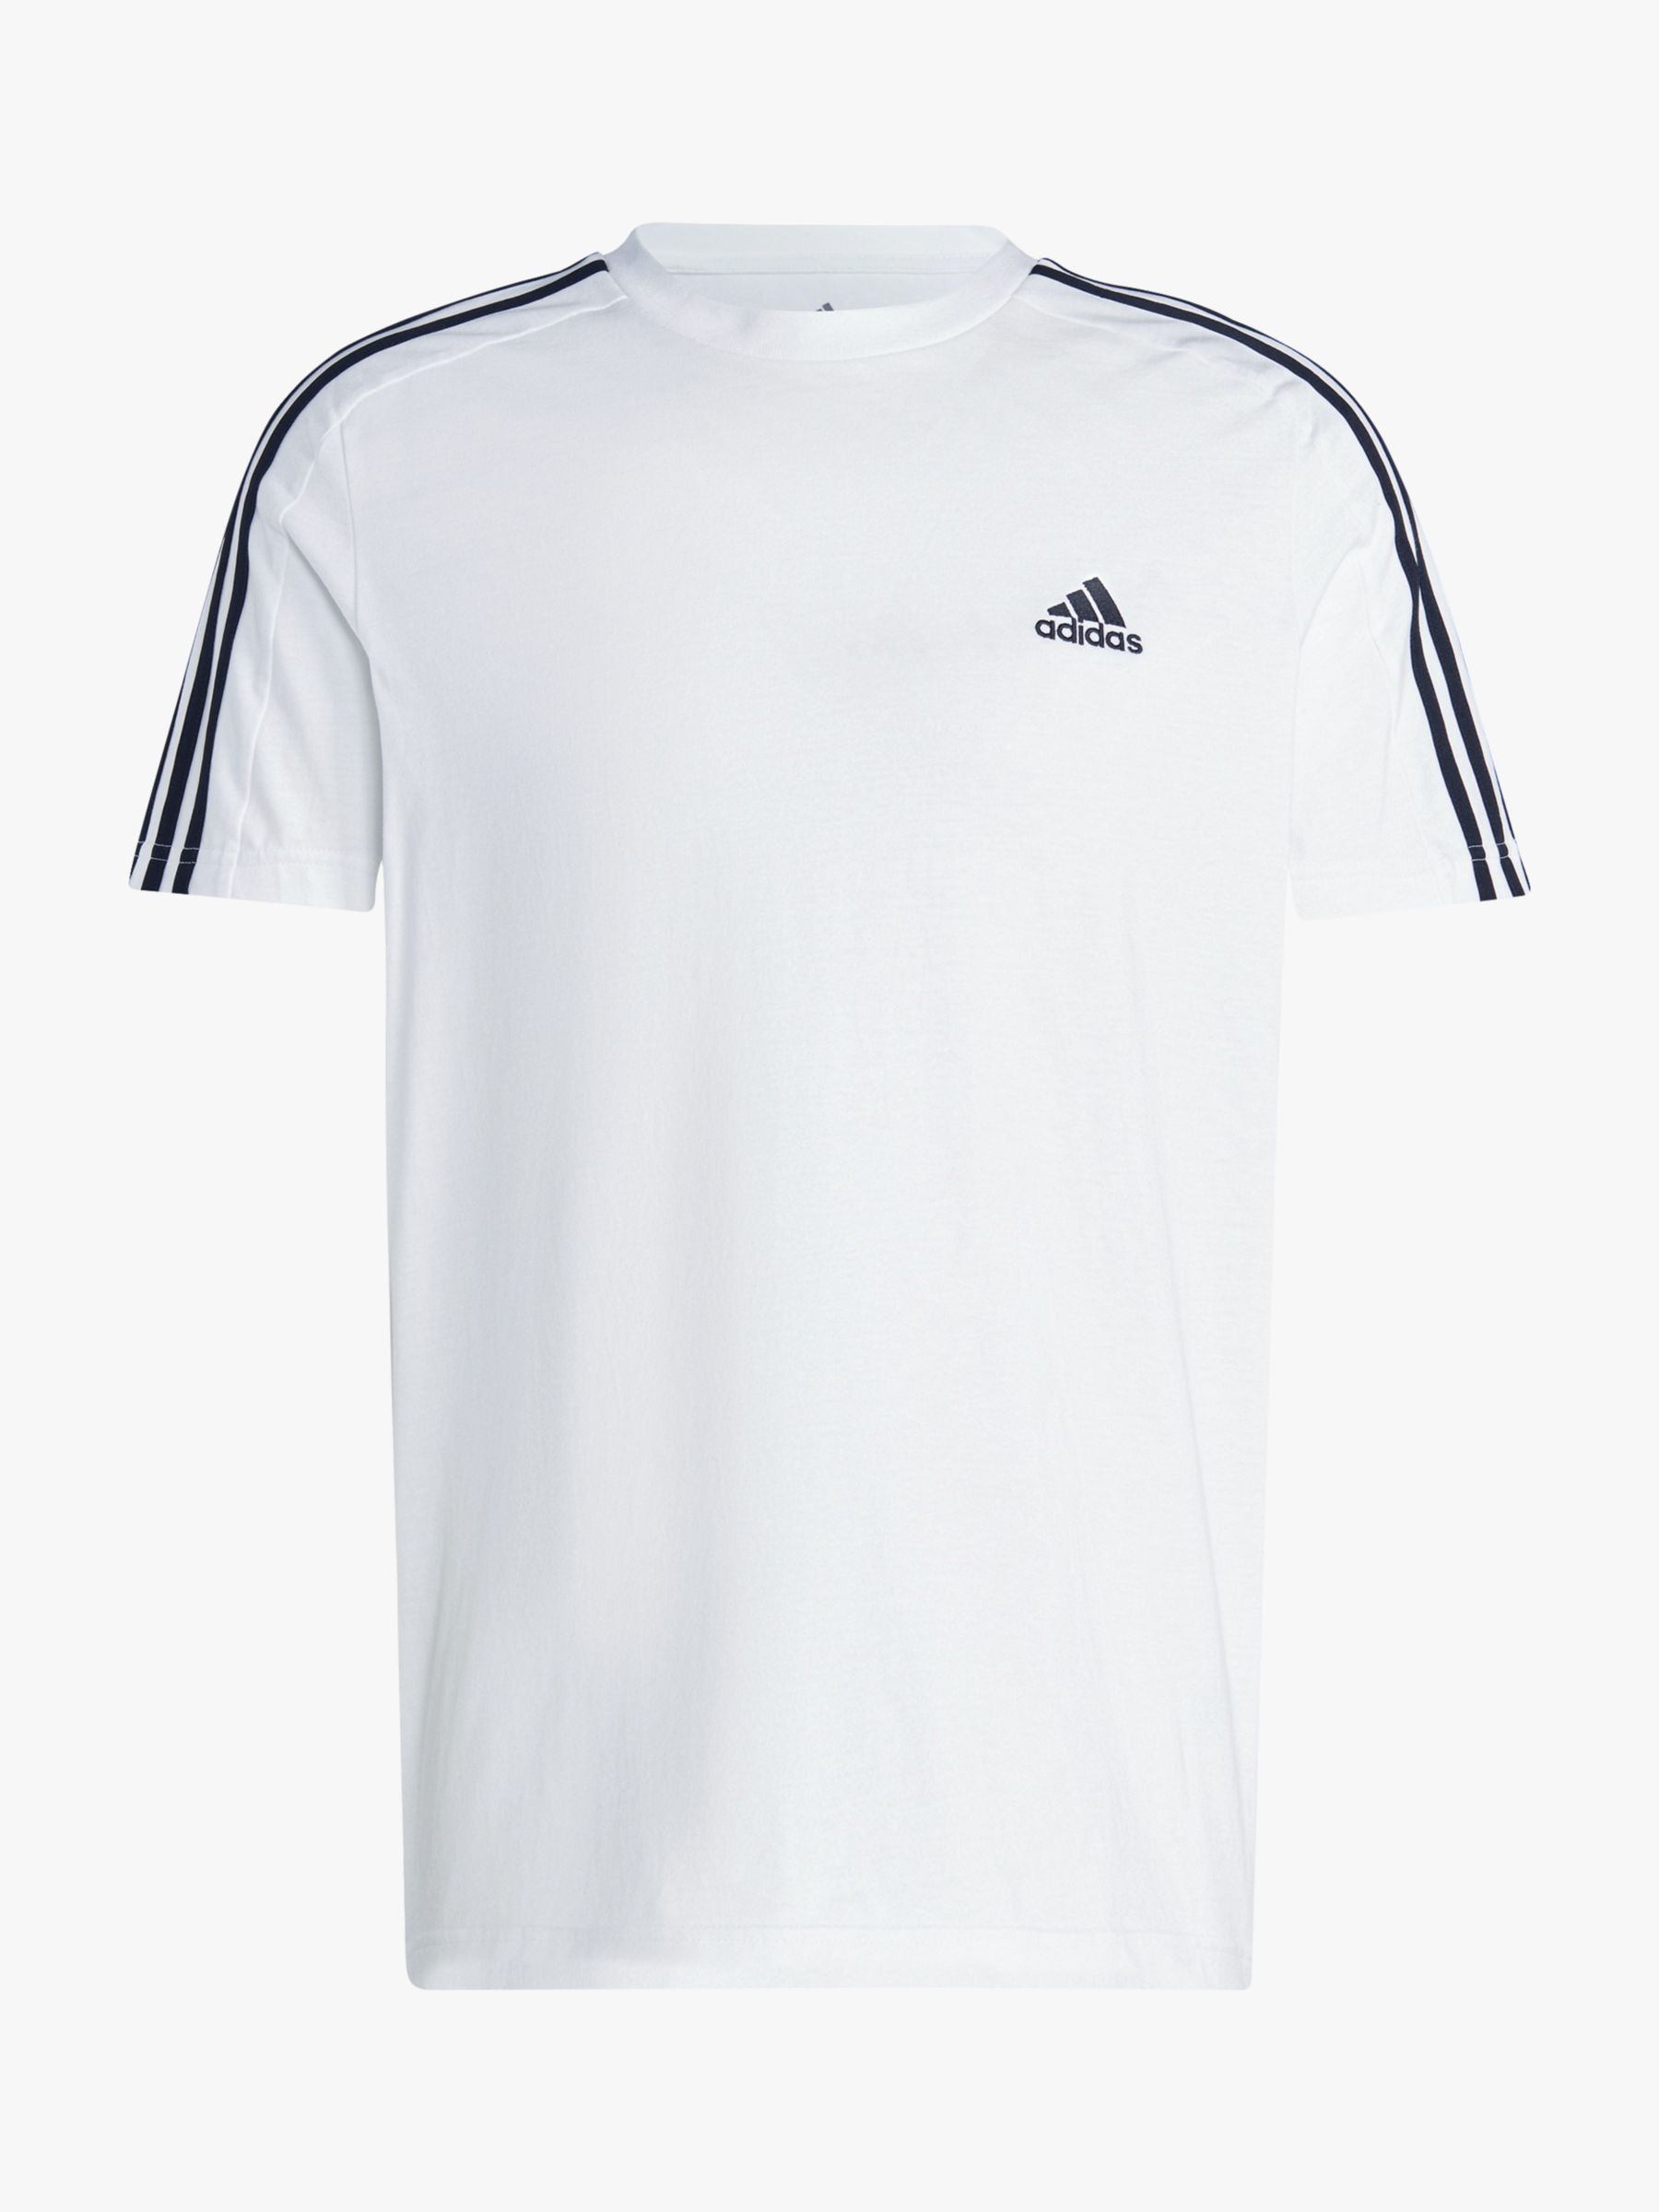 adidas Essentials 3-Stripes T-Shirt, White/Black, S